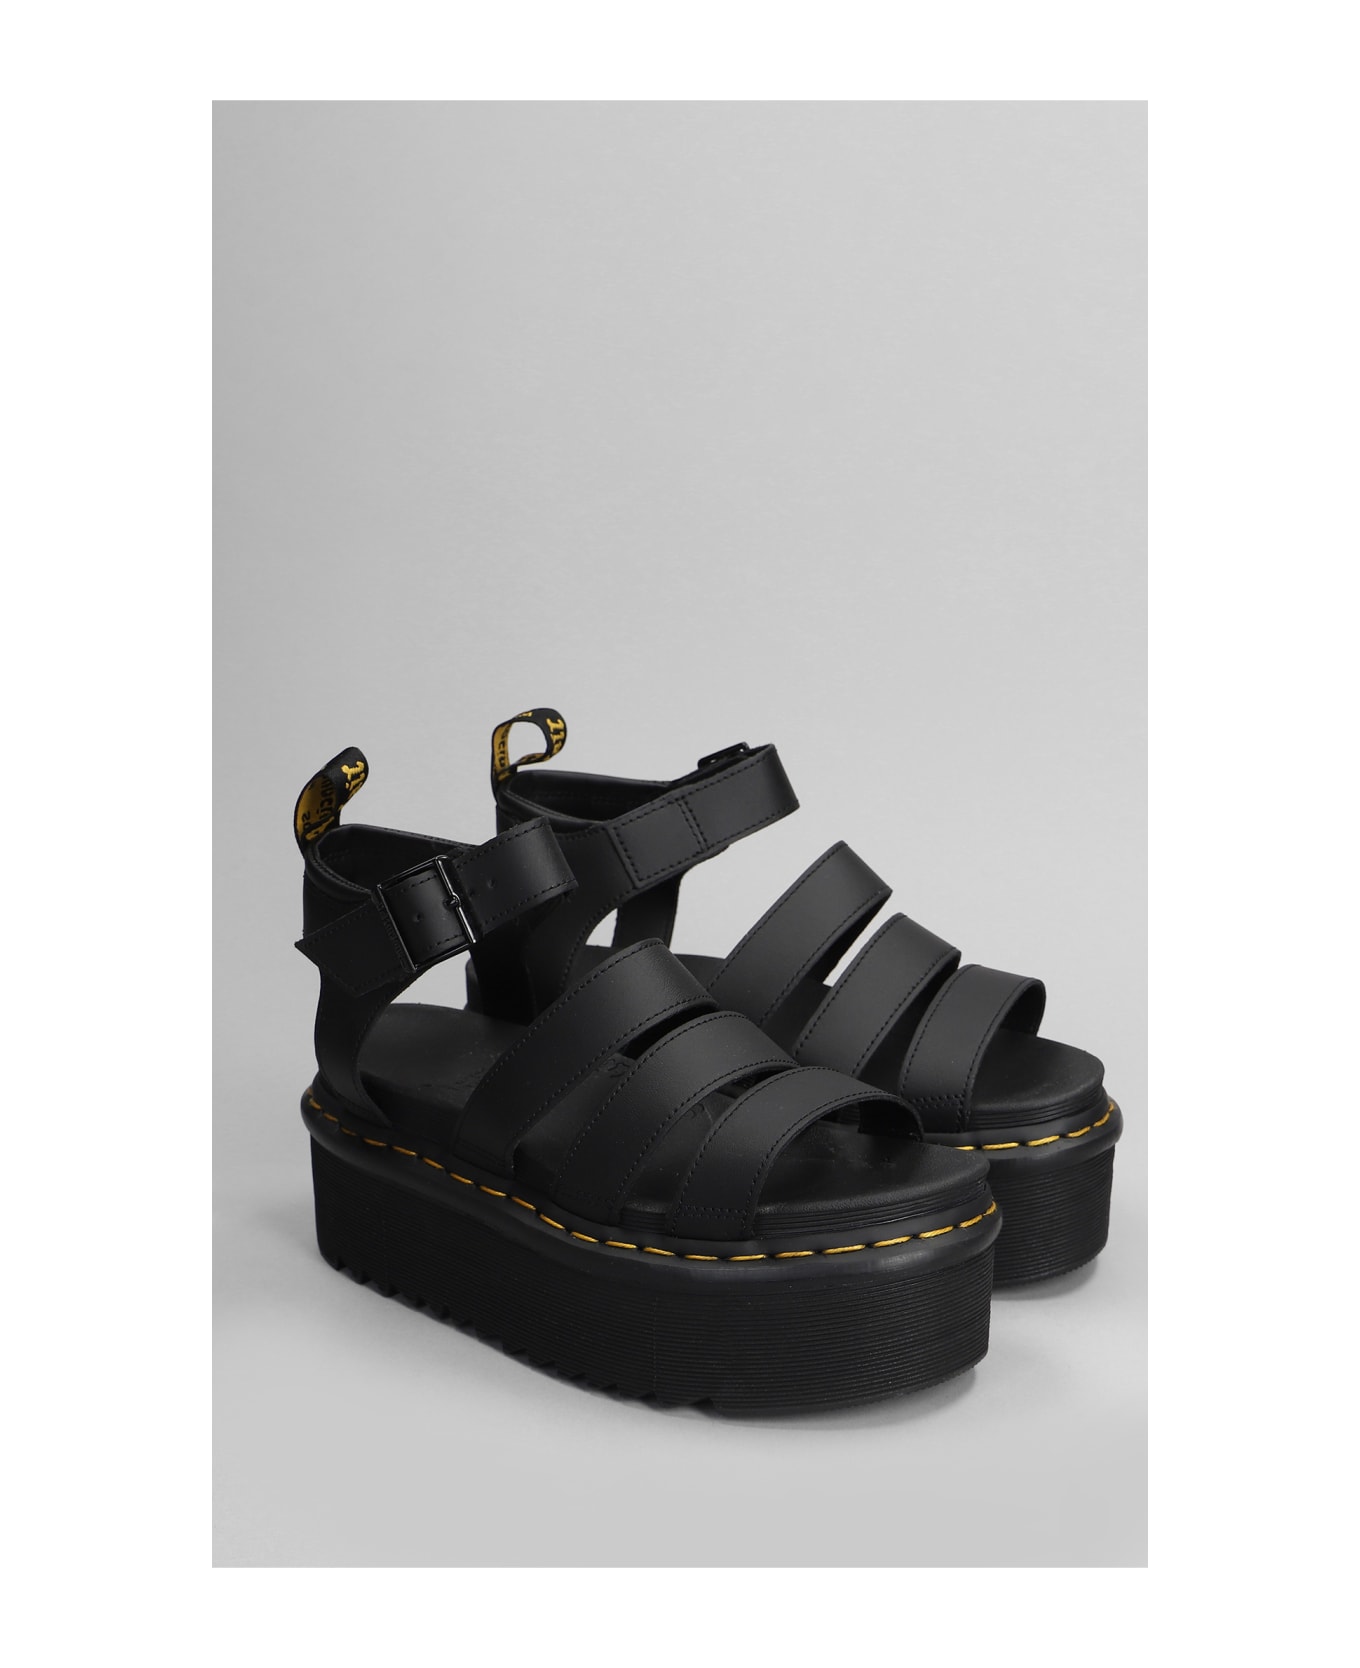 Dr. Martens Blaire Quad Hydro Open Toe Sandals - Black Hydro Leather